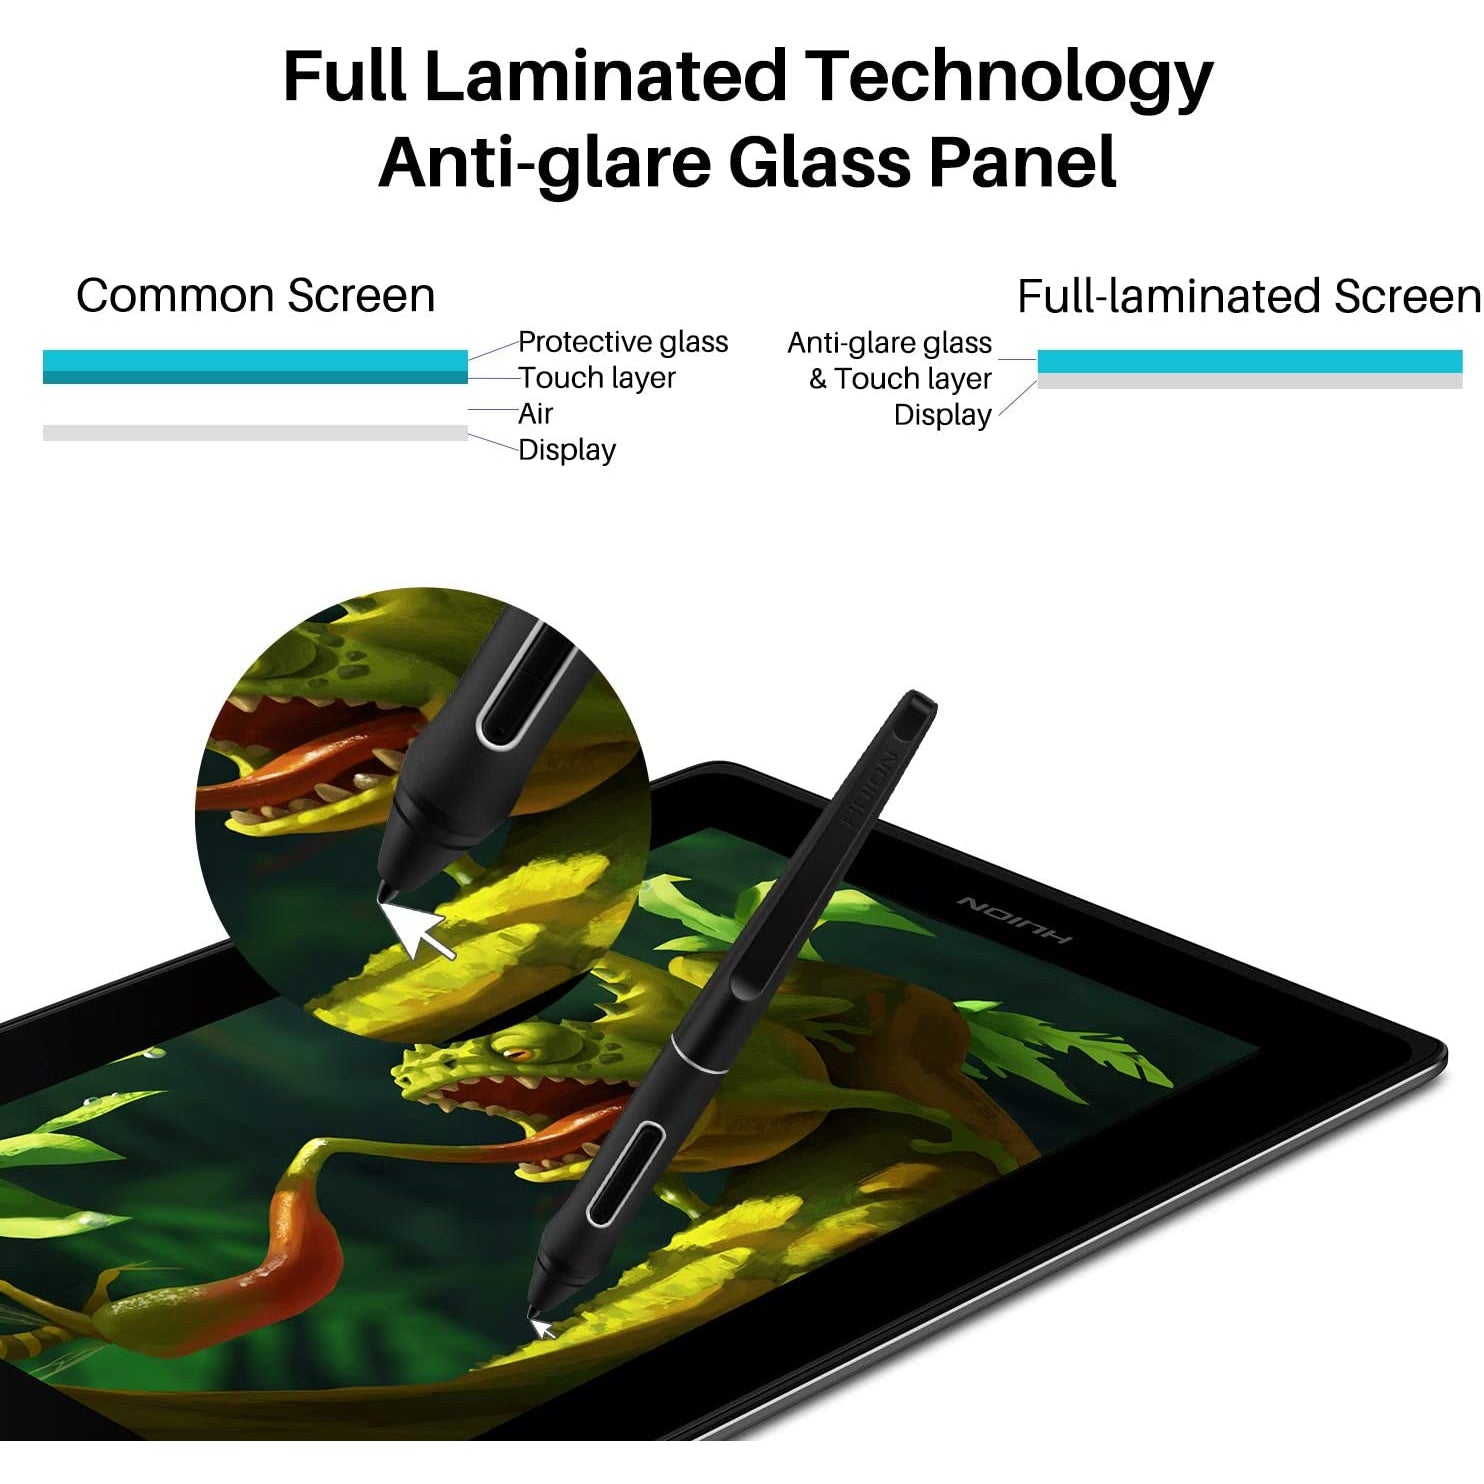 Huion Kamvas Pro 12 Drawing Tablet with Screen Graphics Drawing Monitor Full-Laminated Pen Display, Black